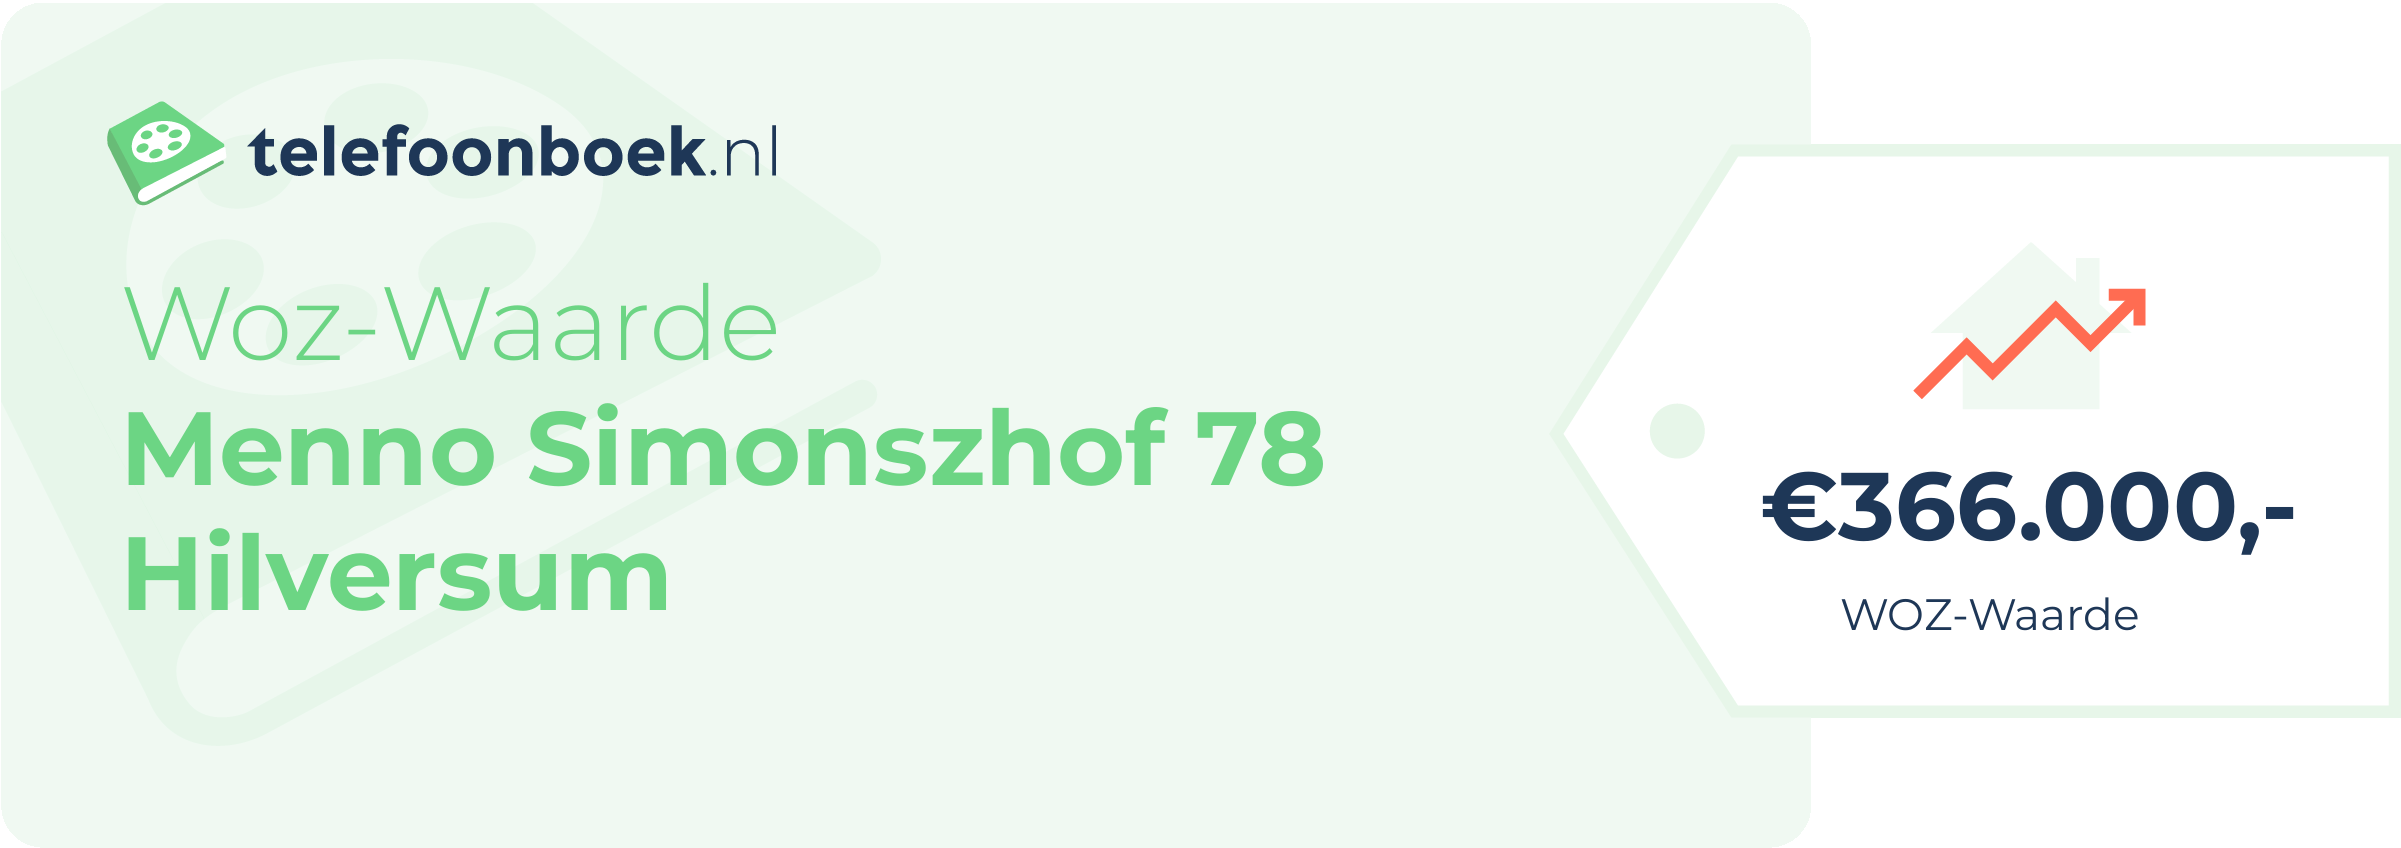 WOZ-waarde Menno Simonszhof 78 Hilversum